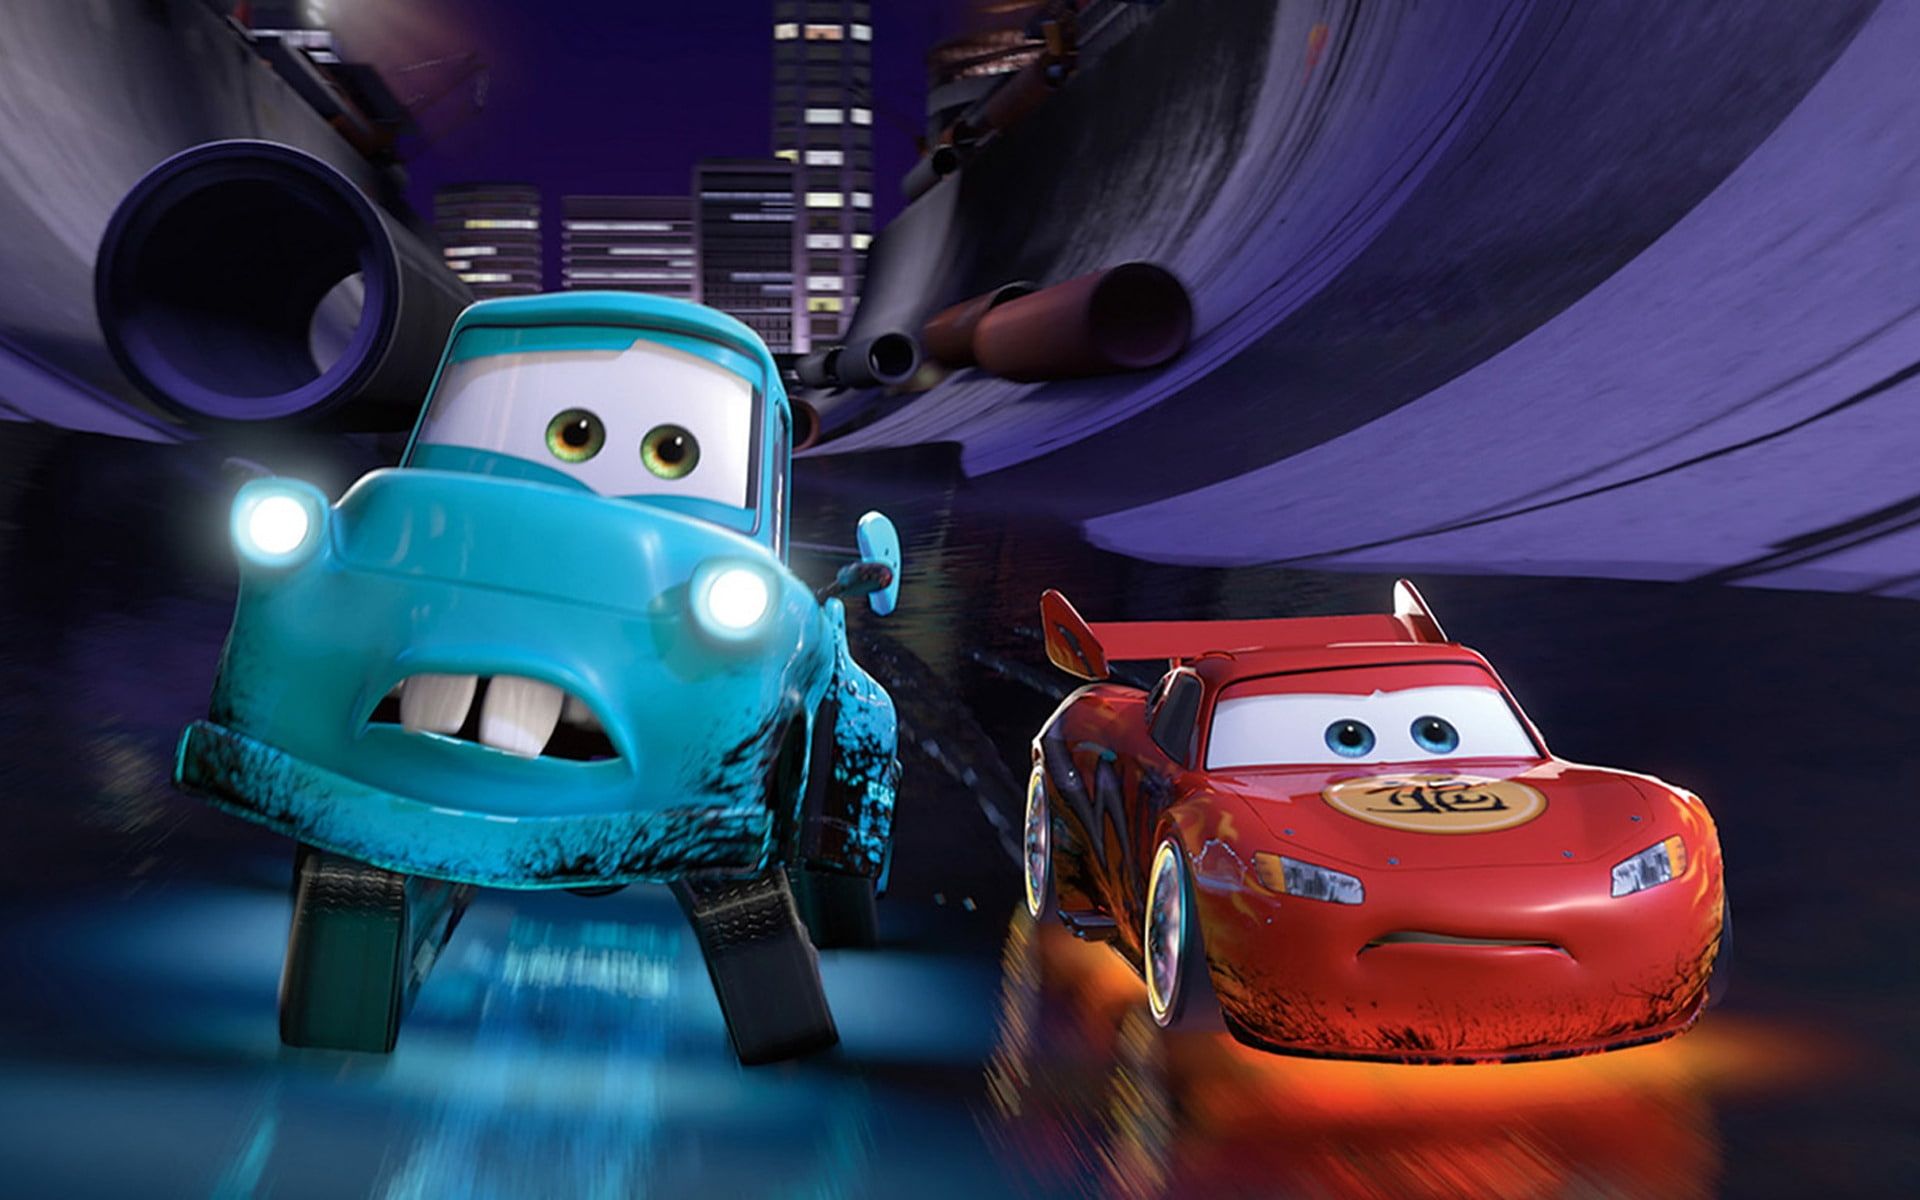 HD wallpaper: Cars 2 Lightning McQueen and Mater, animation, pixar, adventure